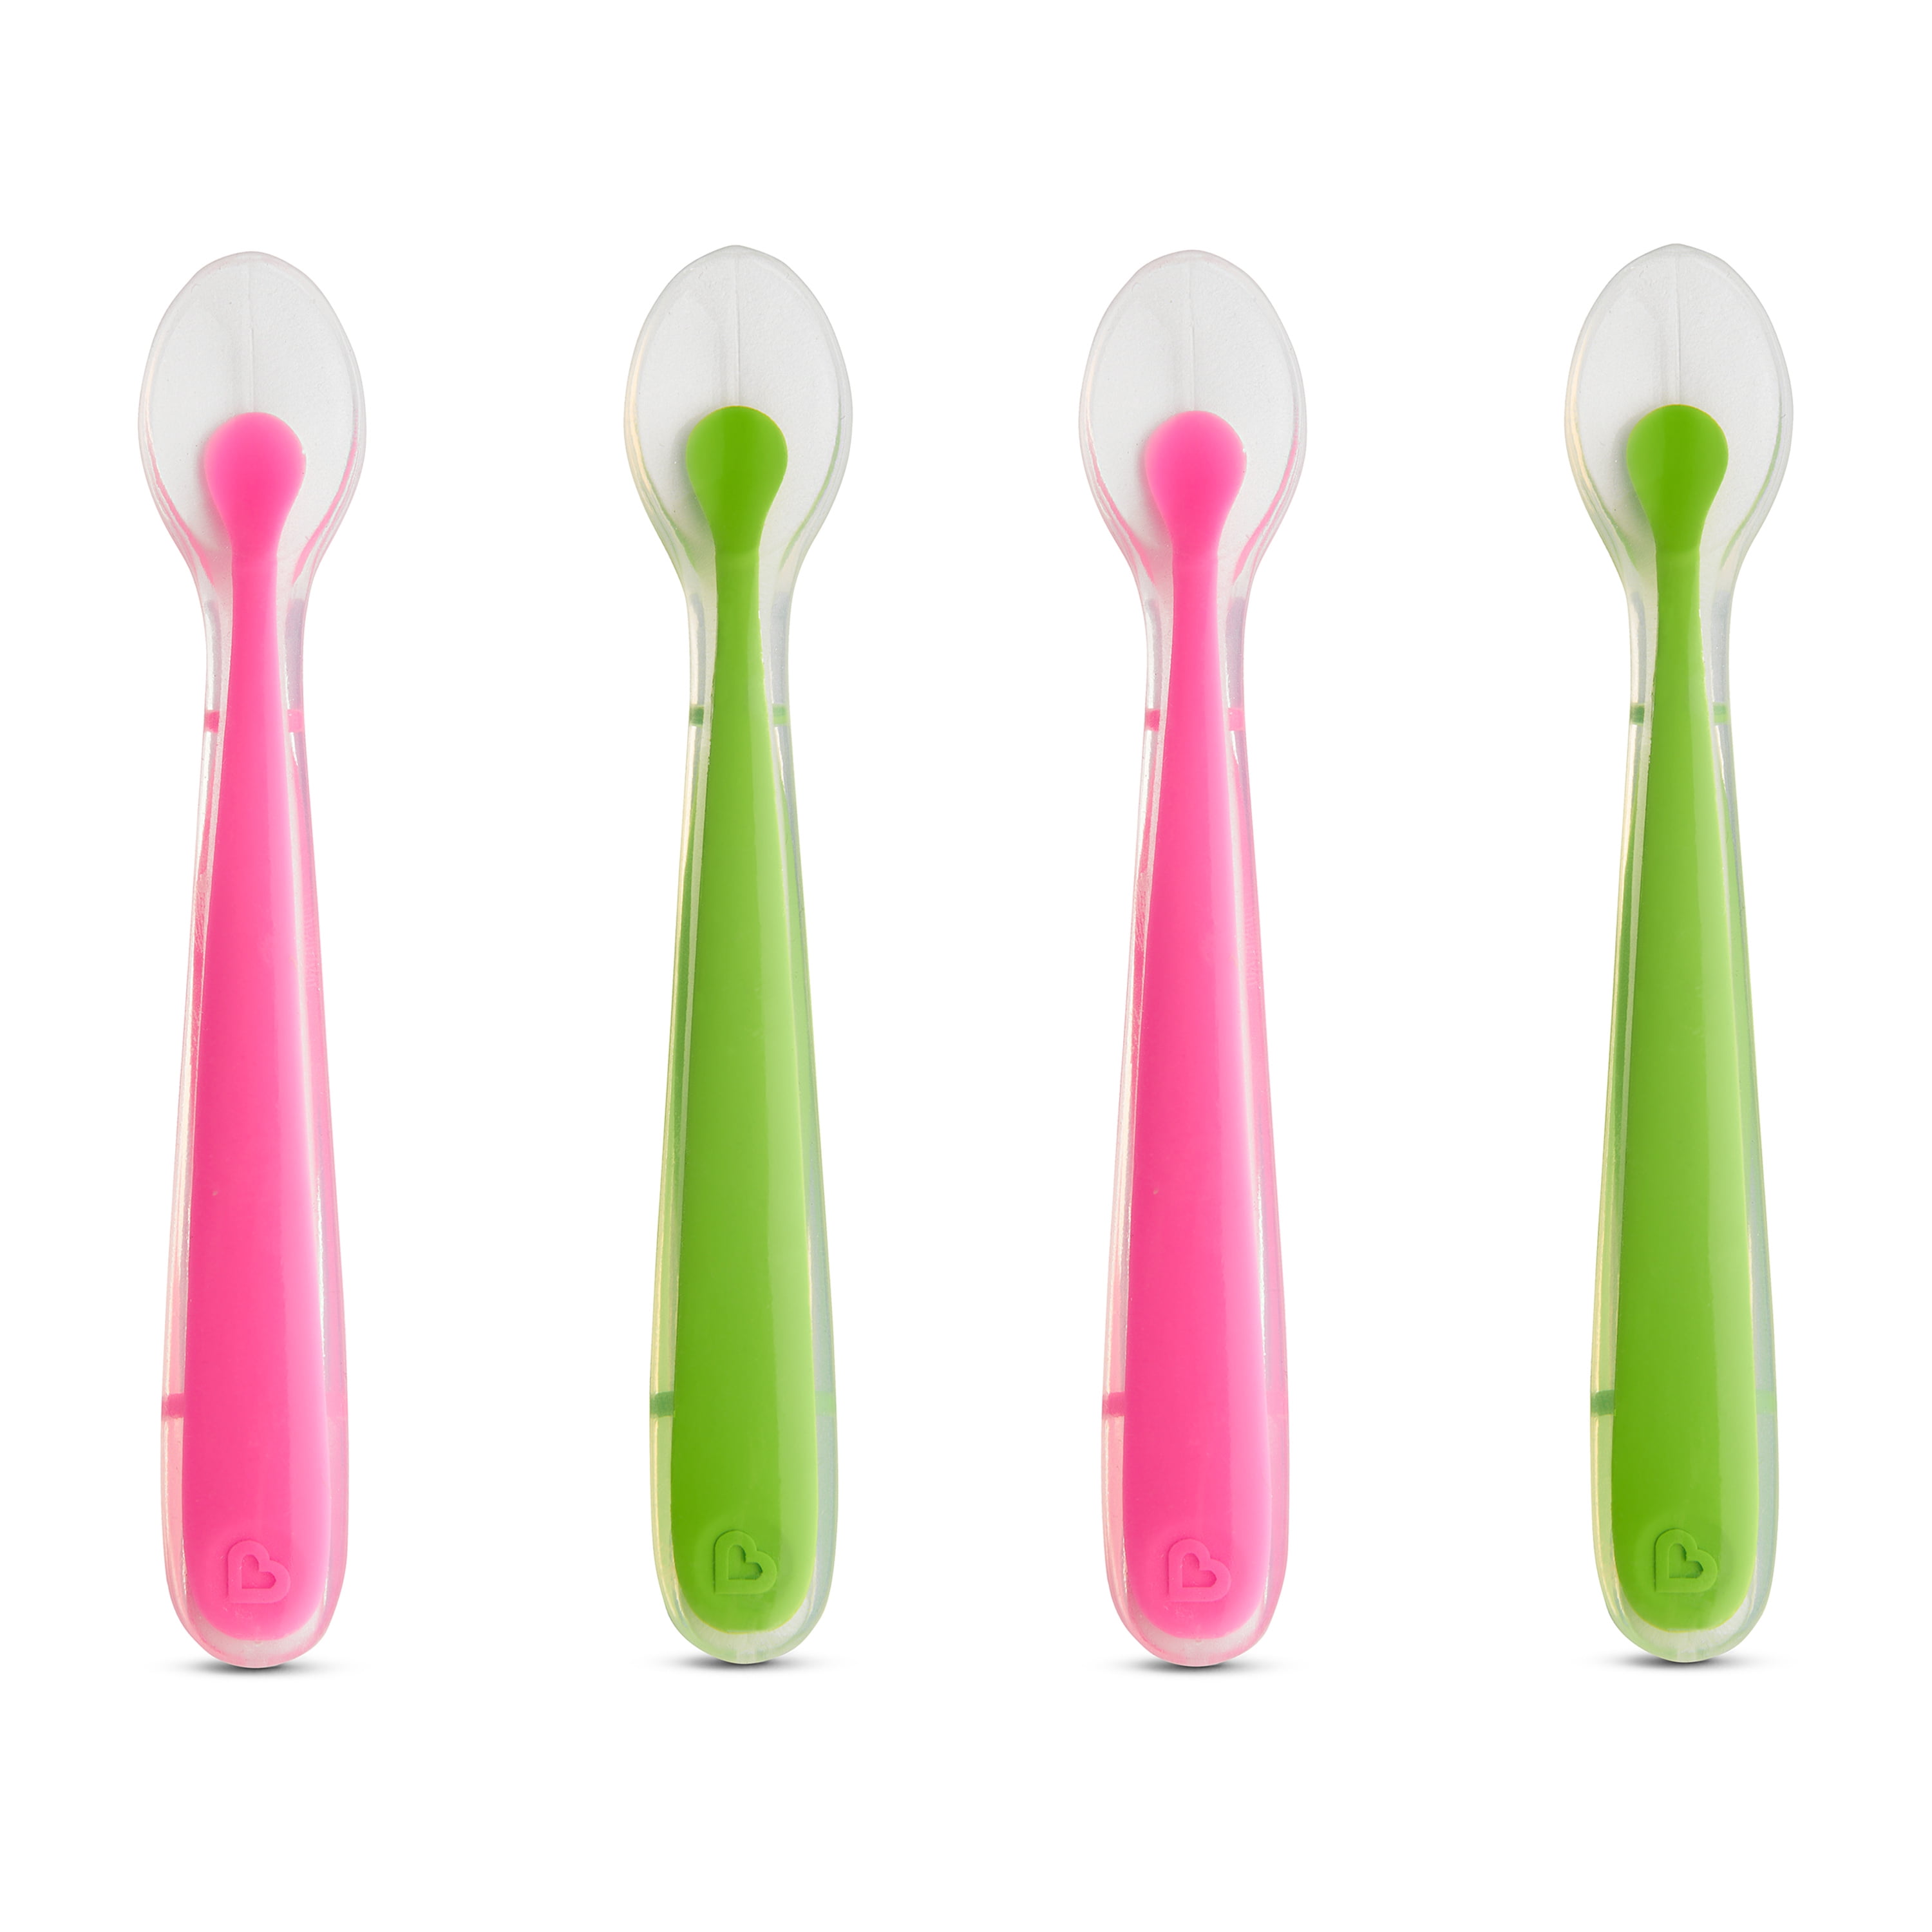 Munchkin Gentle Silicone Spoon, 4 Pack, Pink/Green - Walmart.com